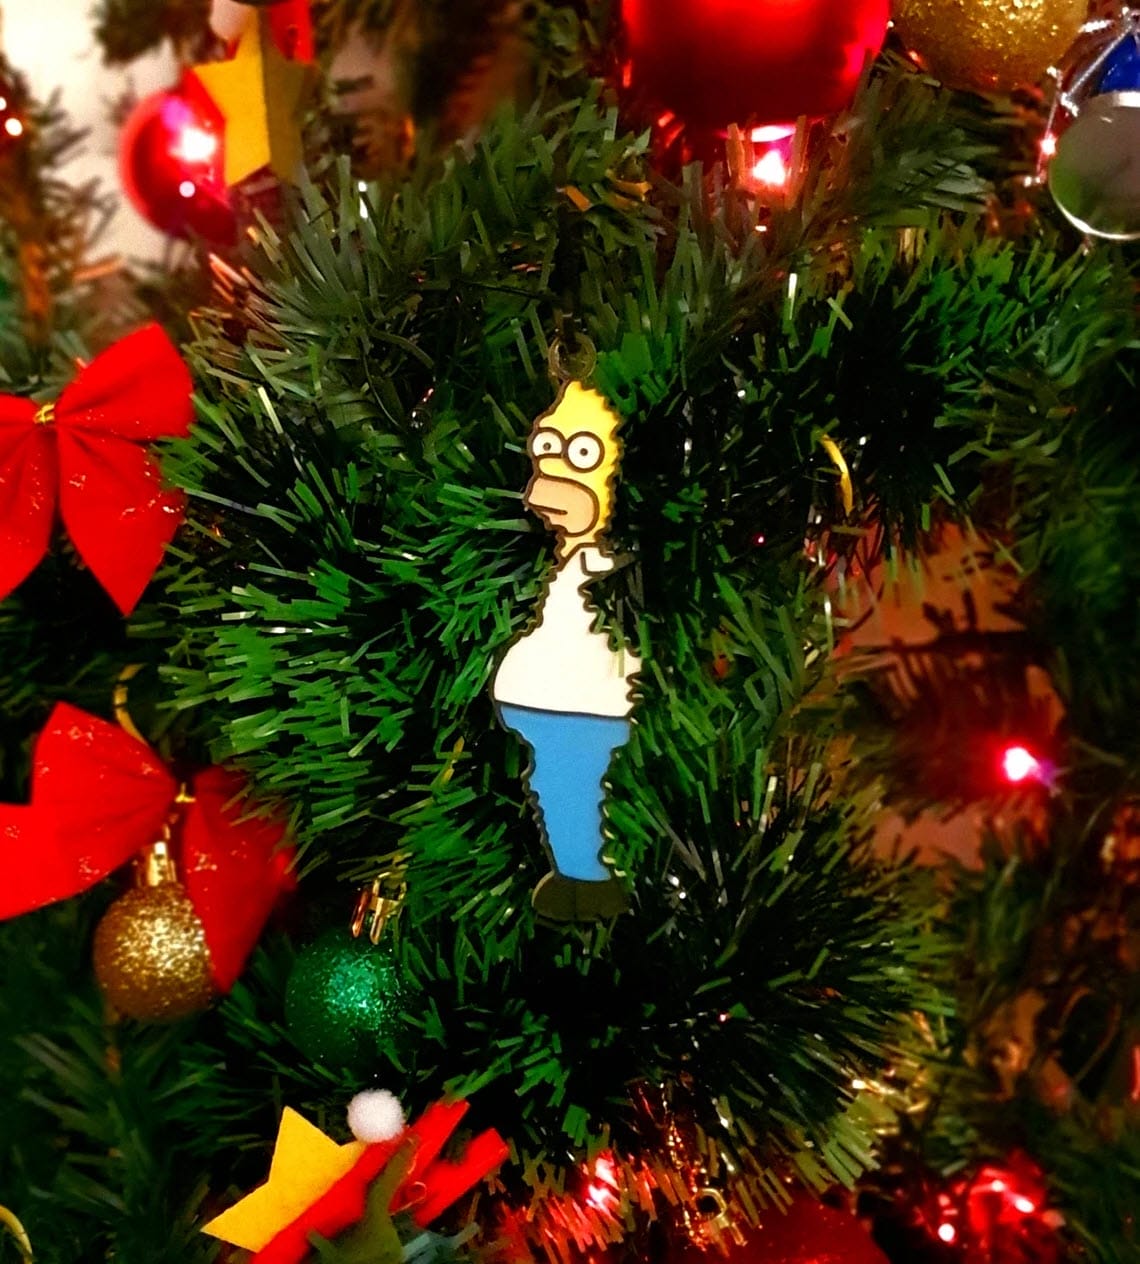 Homer vanishing into a bush/tree